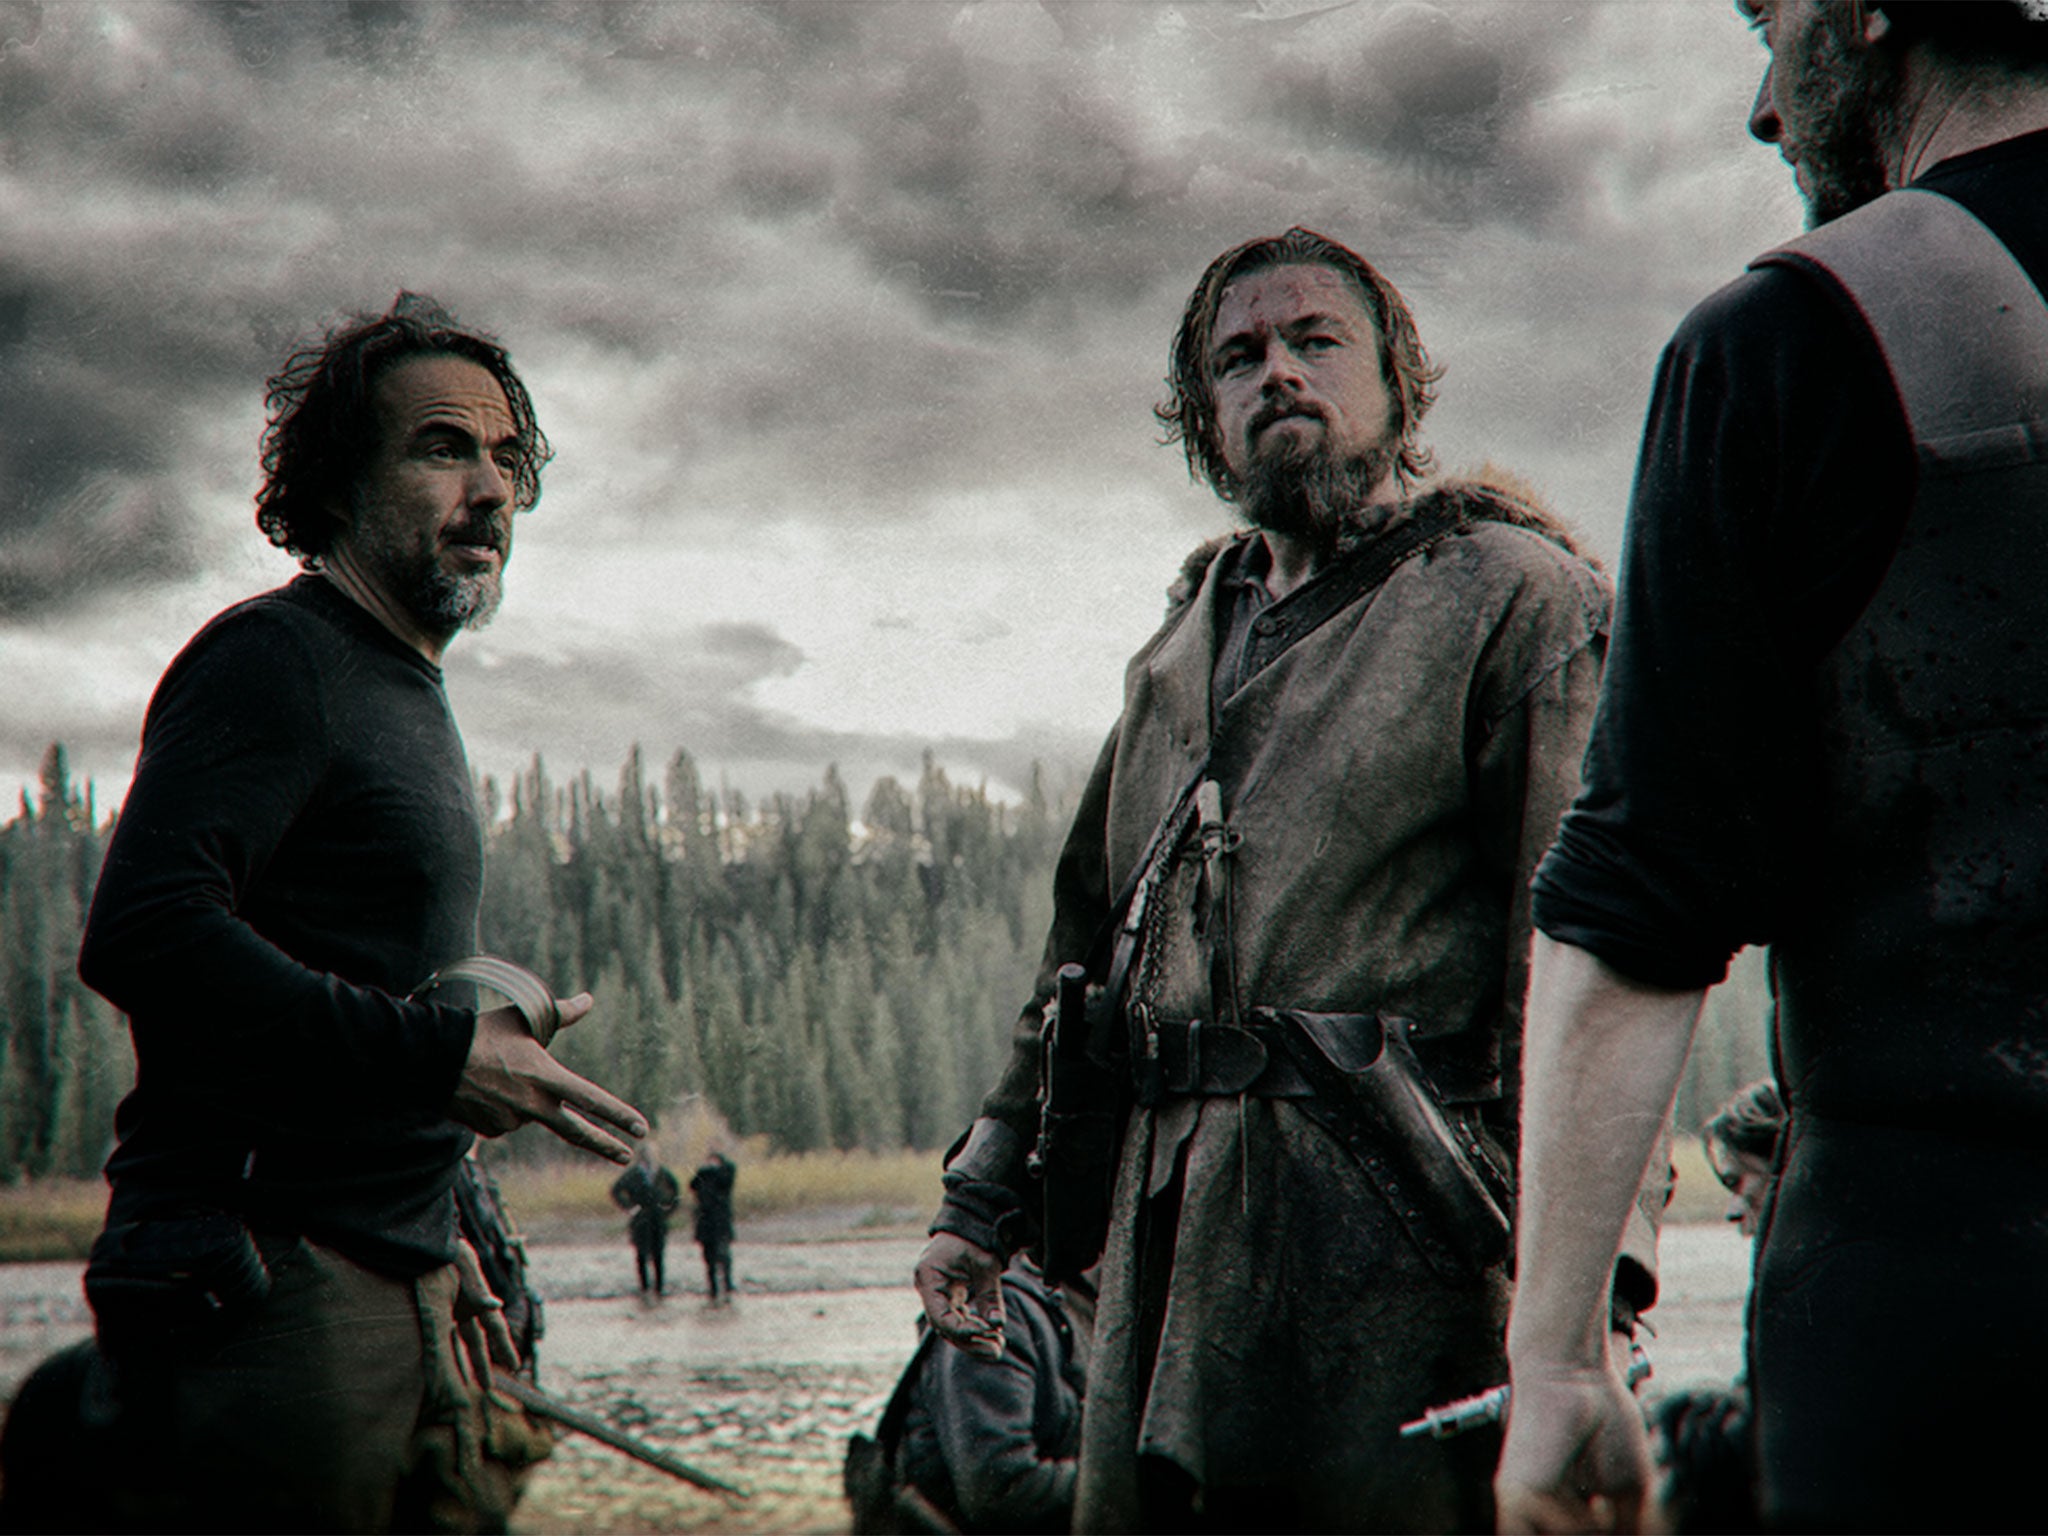 Leonardo DiCaprio shooting The Revenant on location